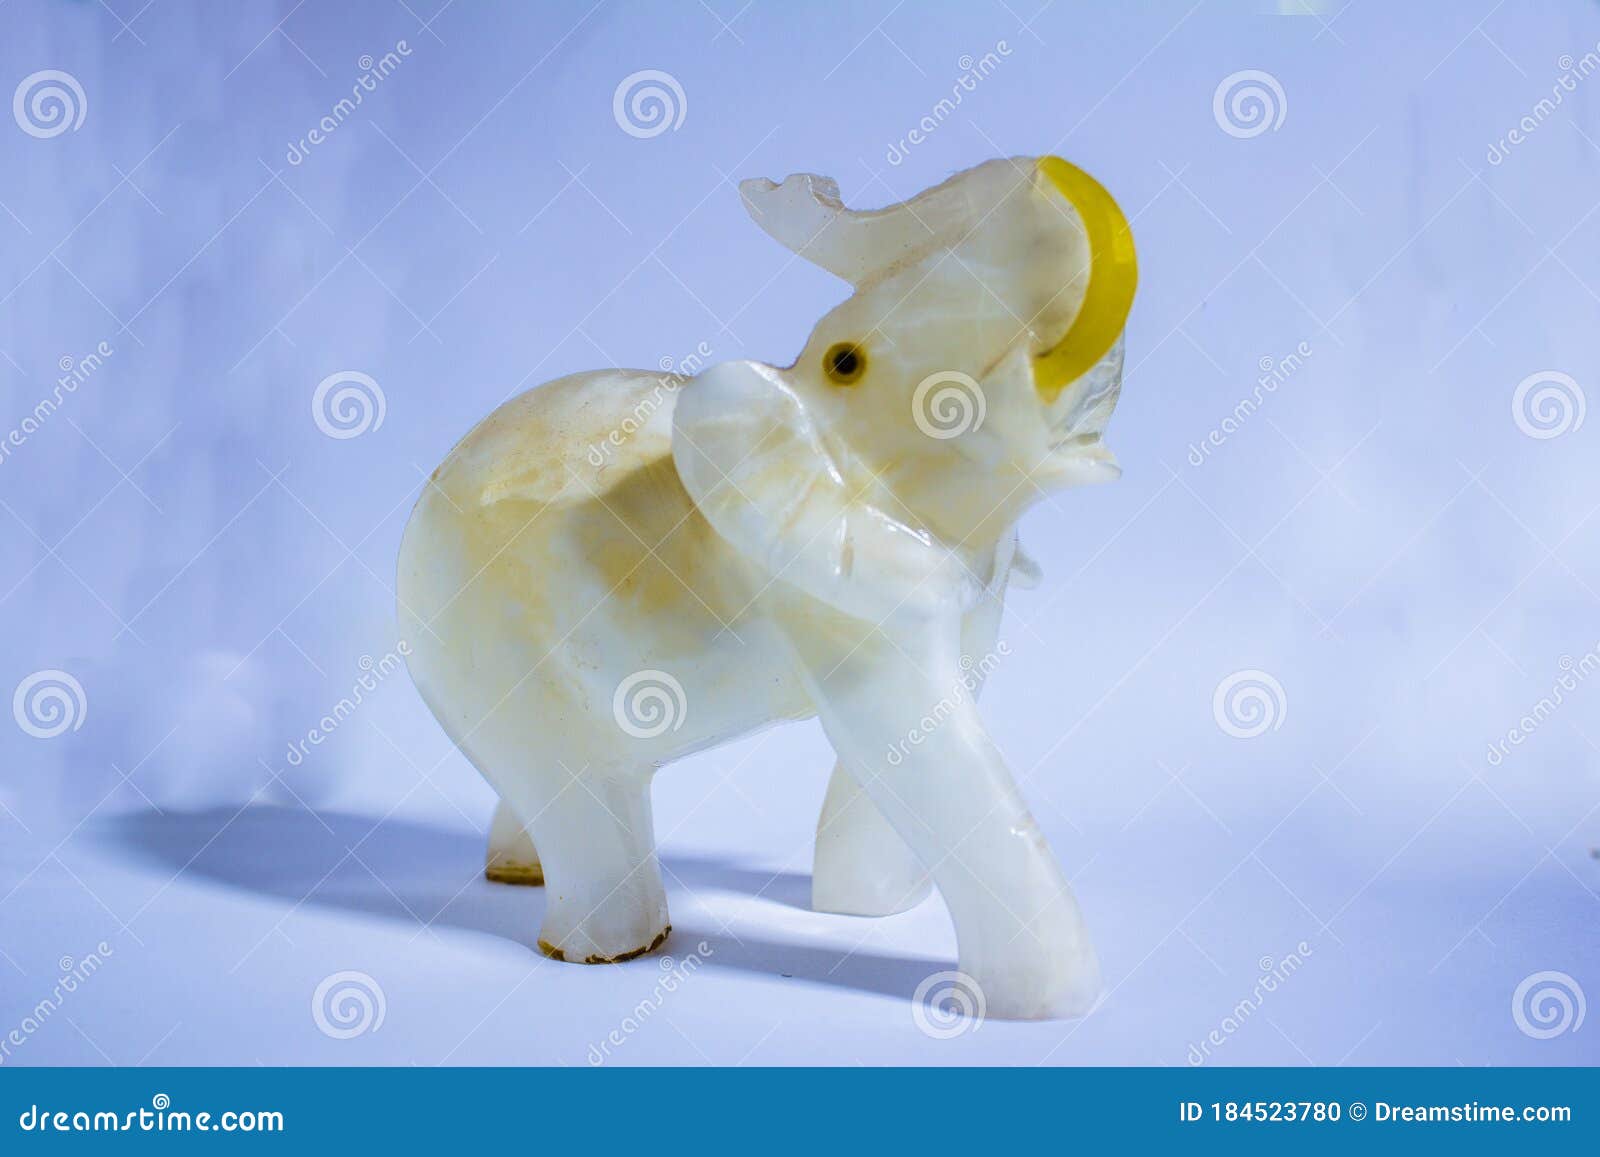 elephant white stone ornament artistic home